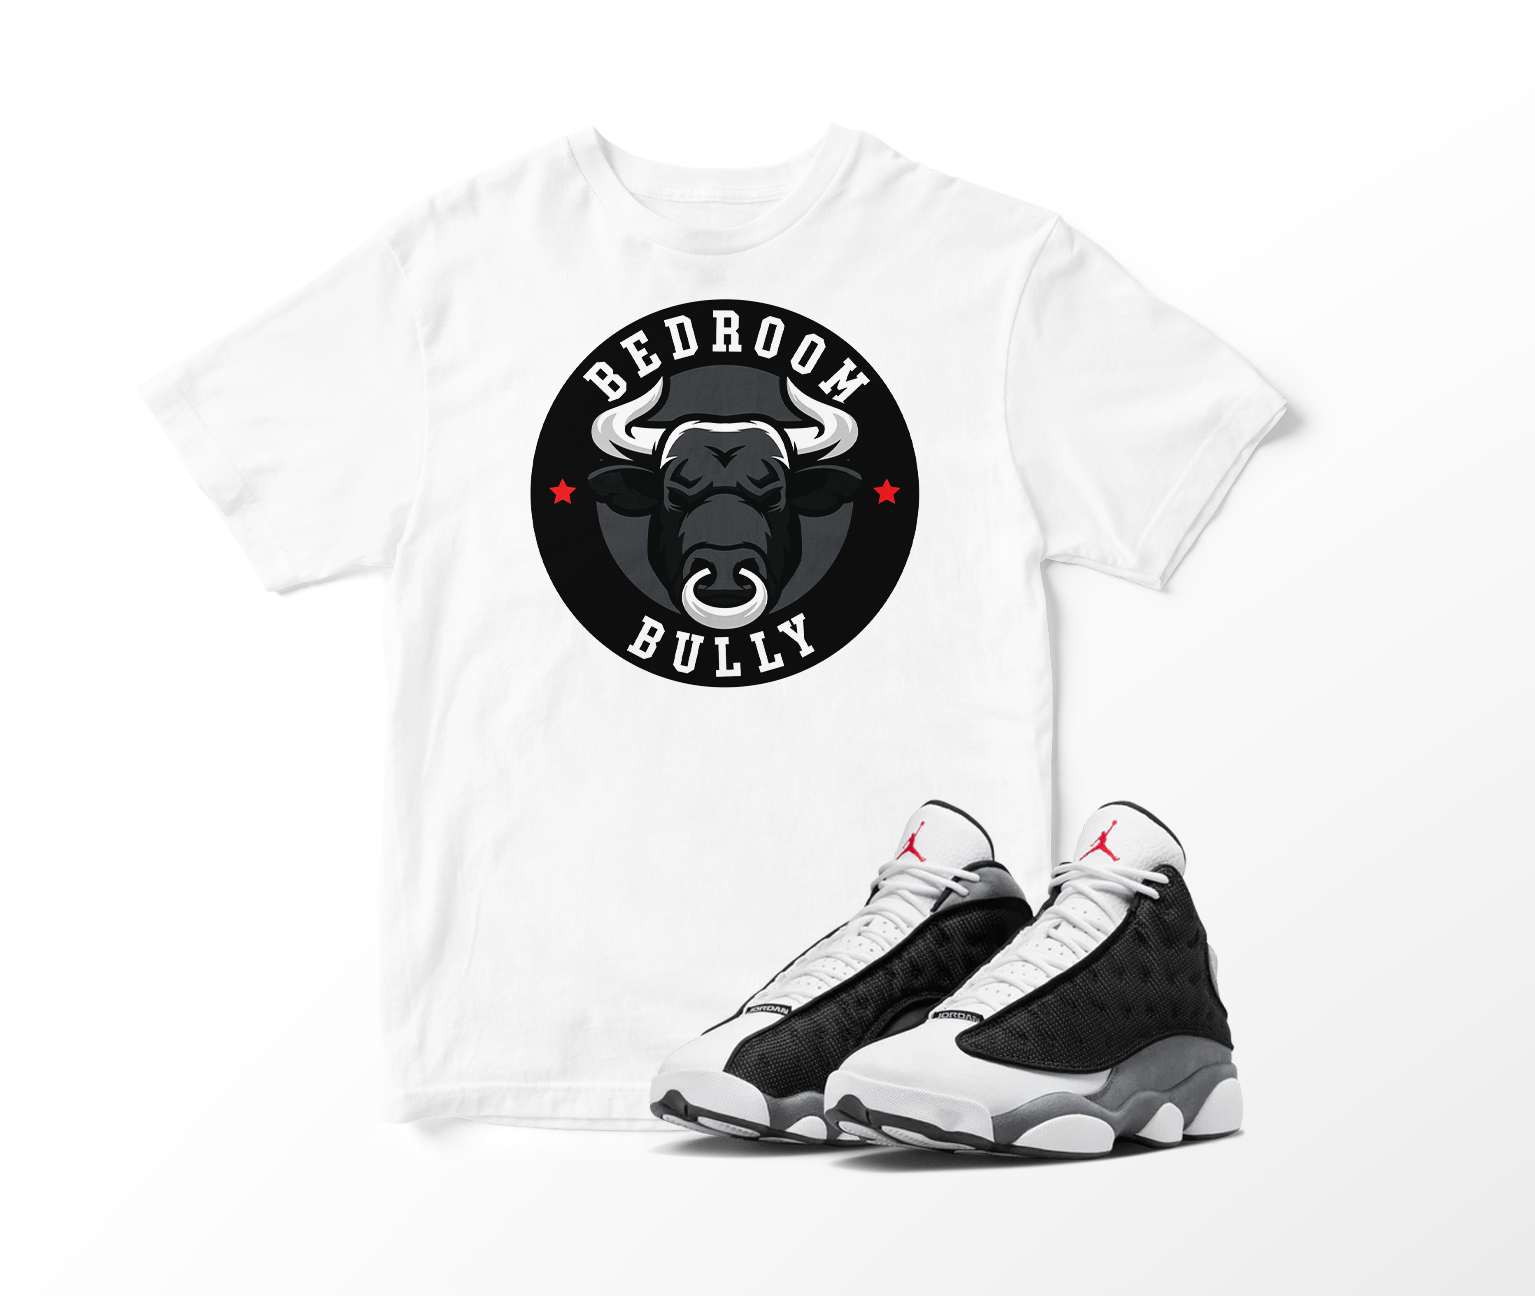 'Bedroom Bully' Custom Graphic Short Sleeve T-Shirt To Match Air Jordan 13 Black Flint